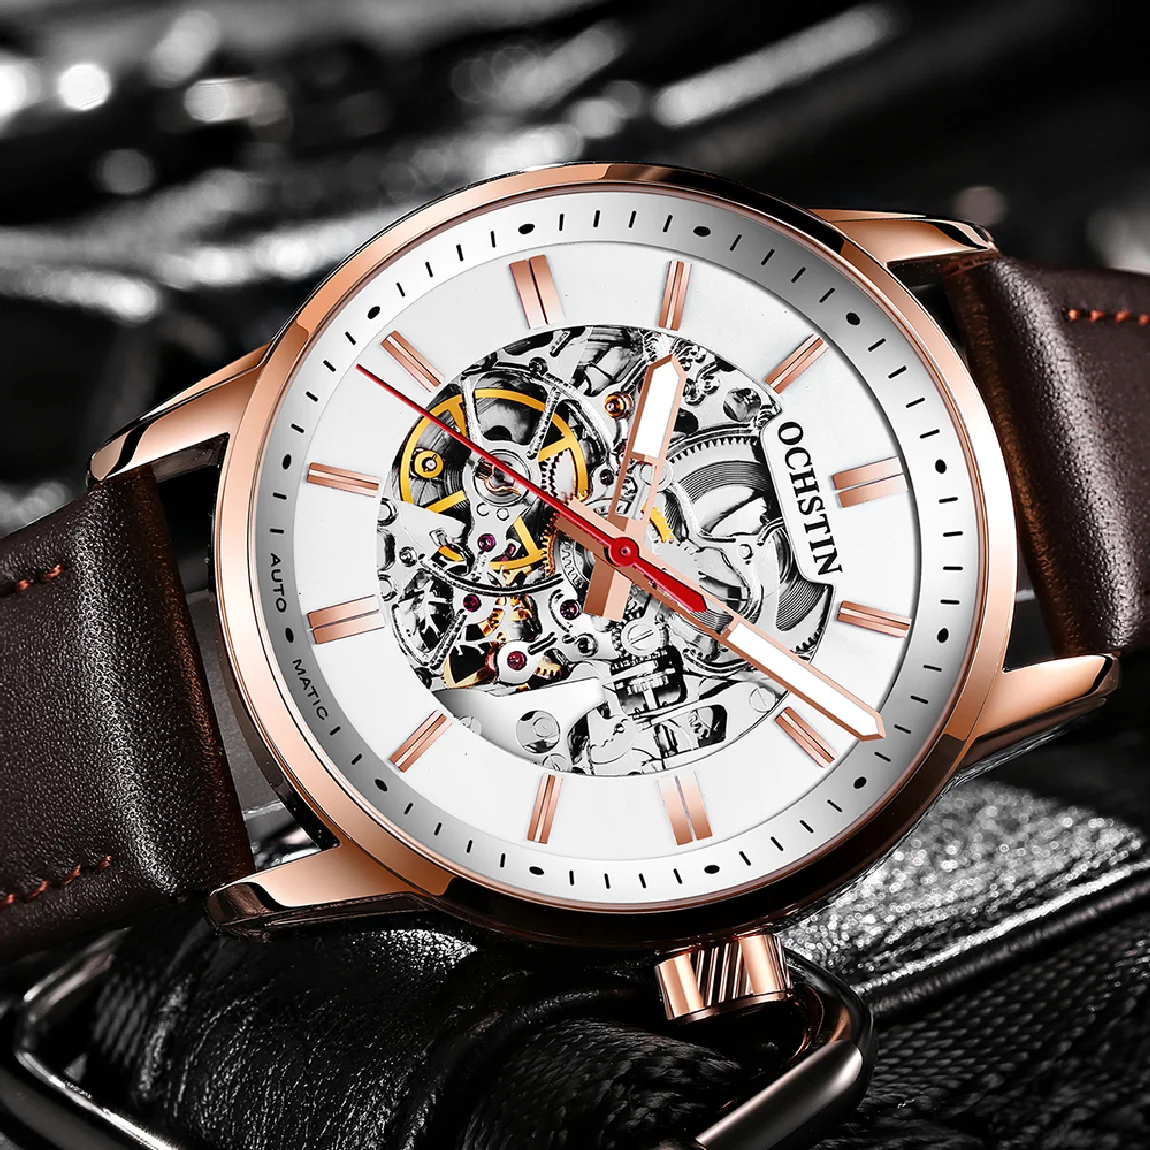 

OCHSTIN Males Leather Wristwatches Mens Automatic Mechanical Movement Watches Luminous Pilot Waterproof Fashion Vintage Clocks